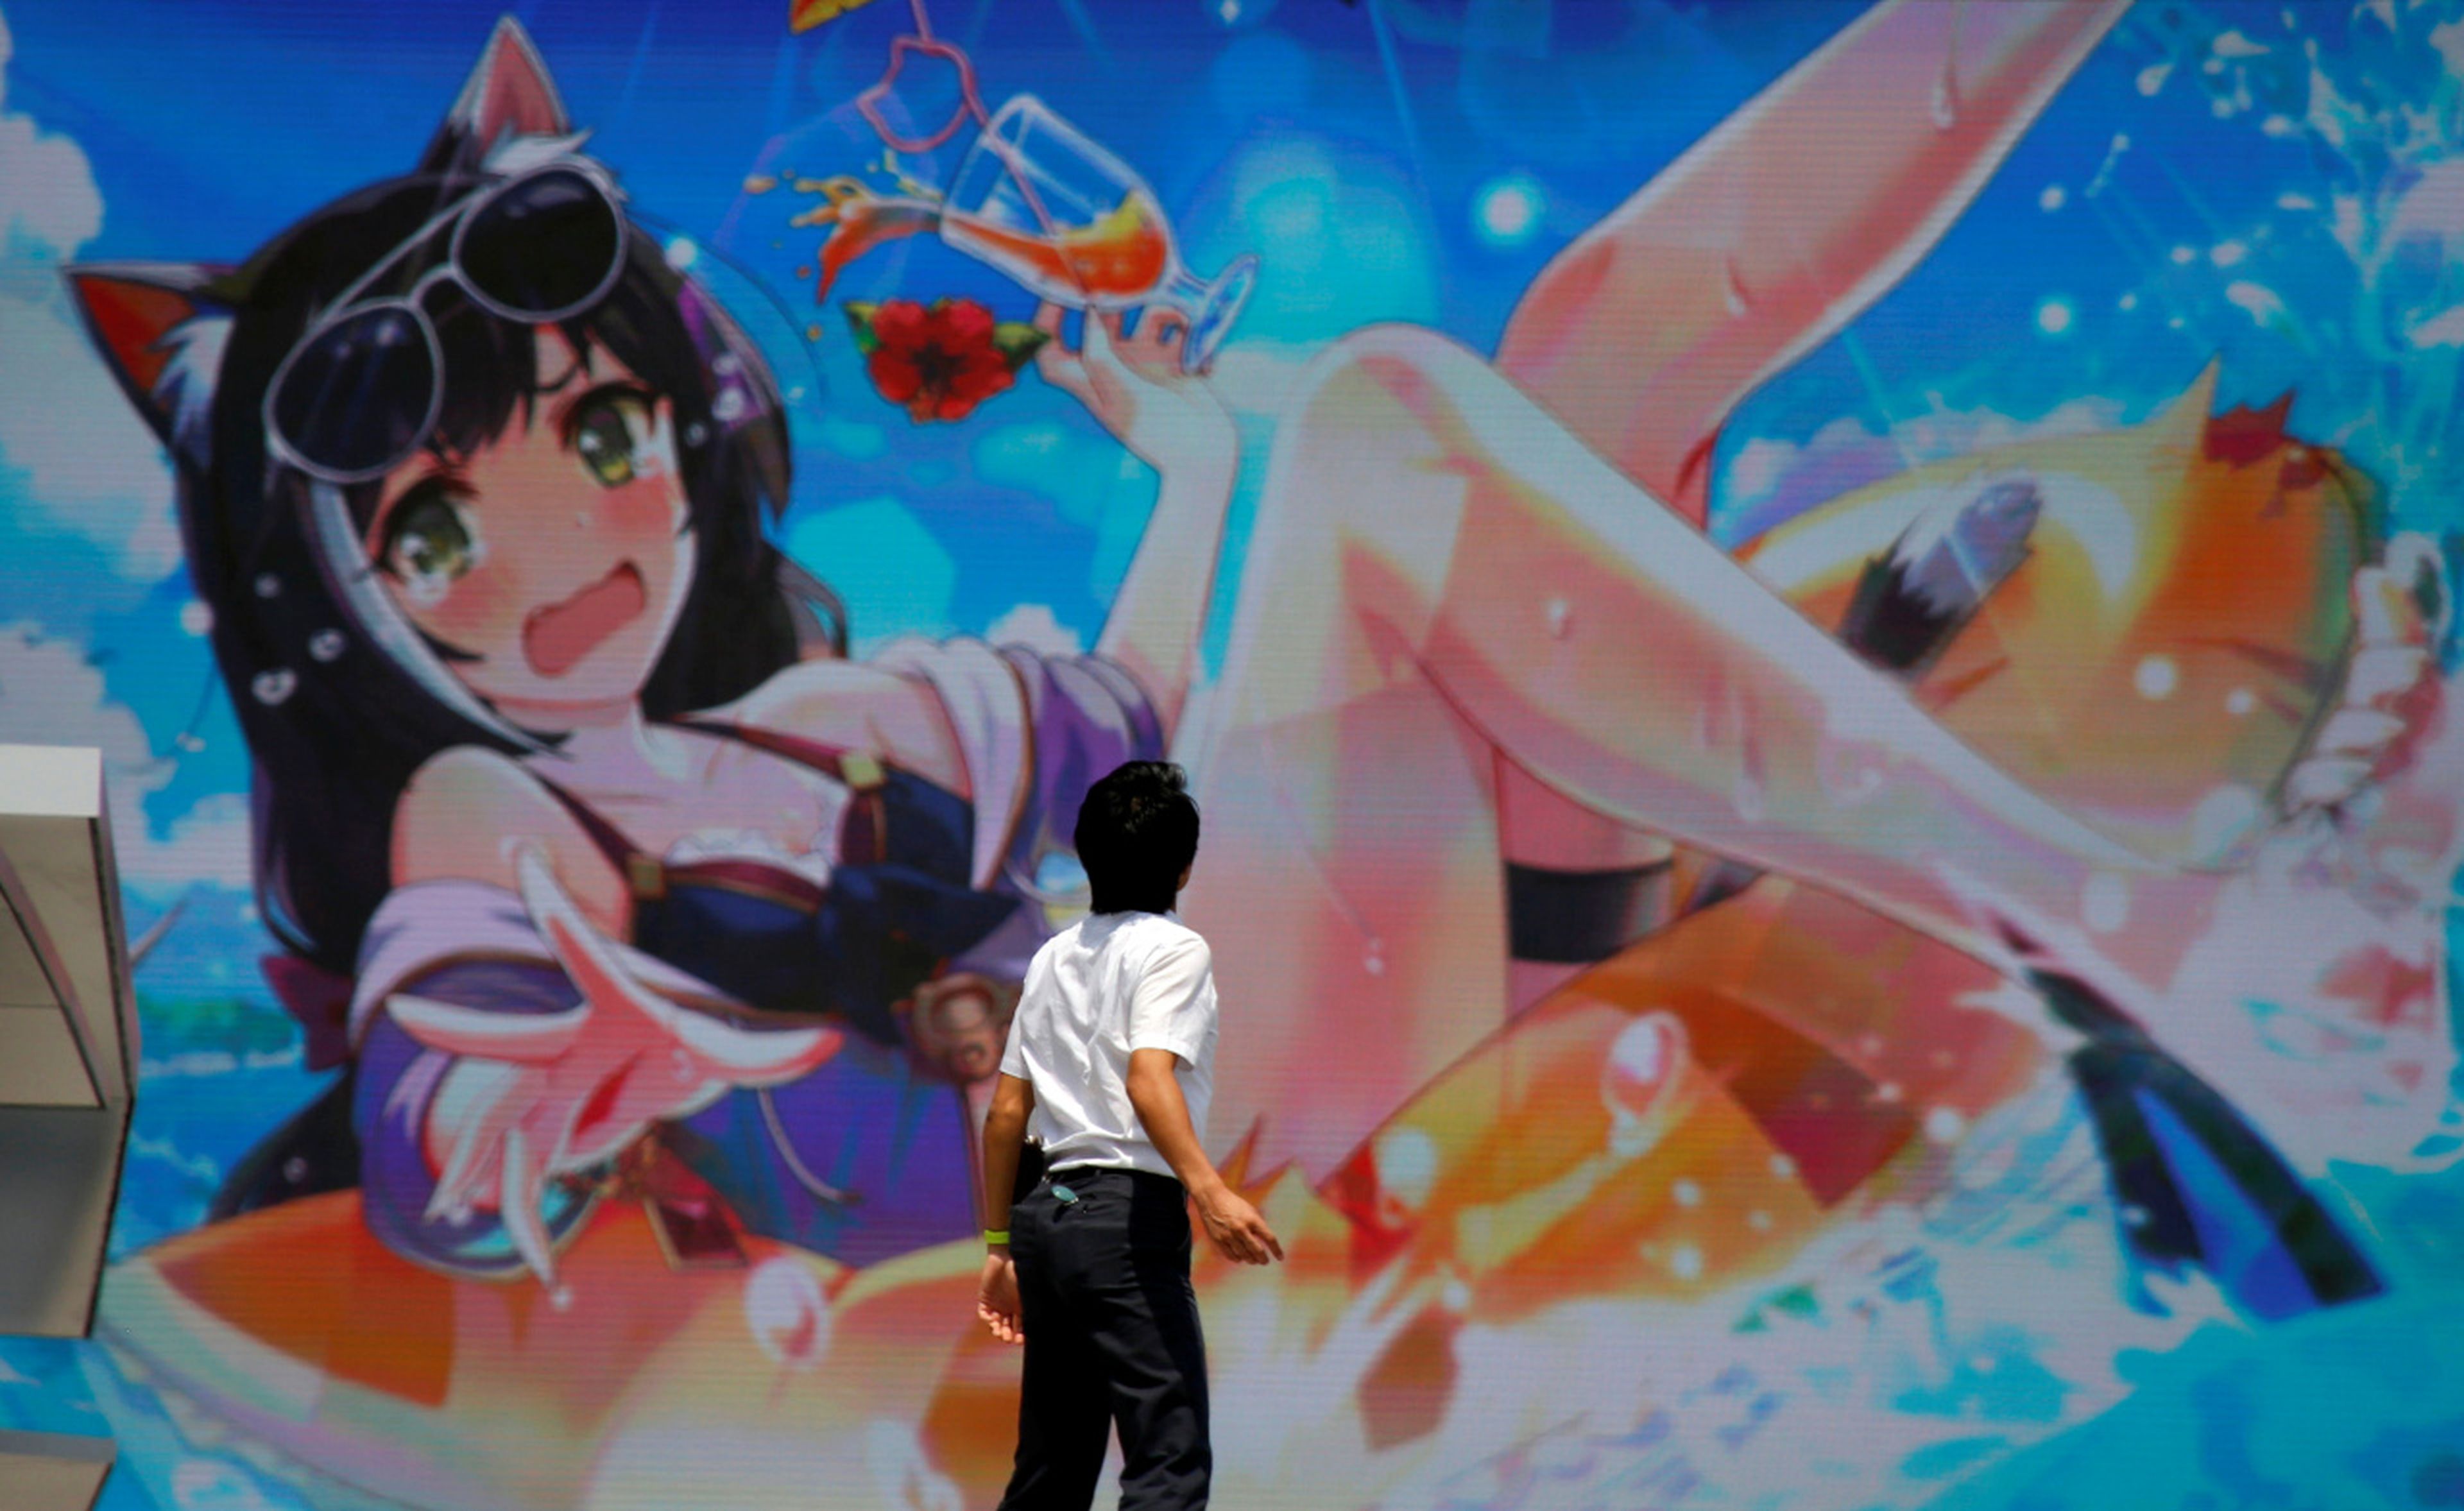 Hombre frente a un fotograma de una serie de anime.